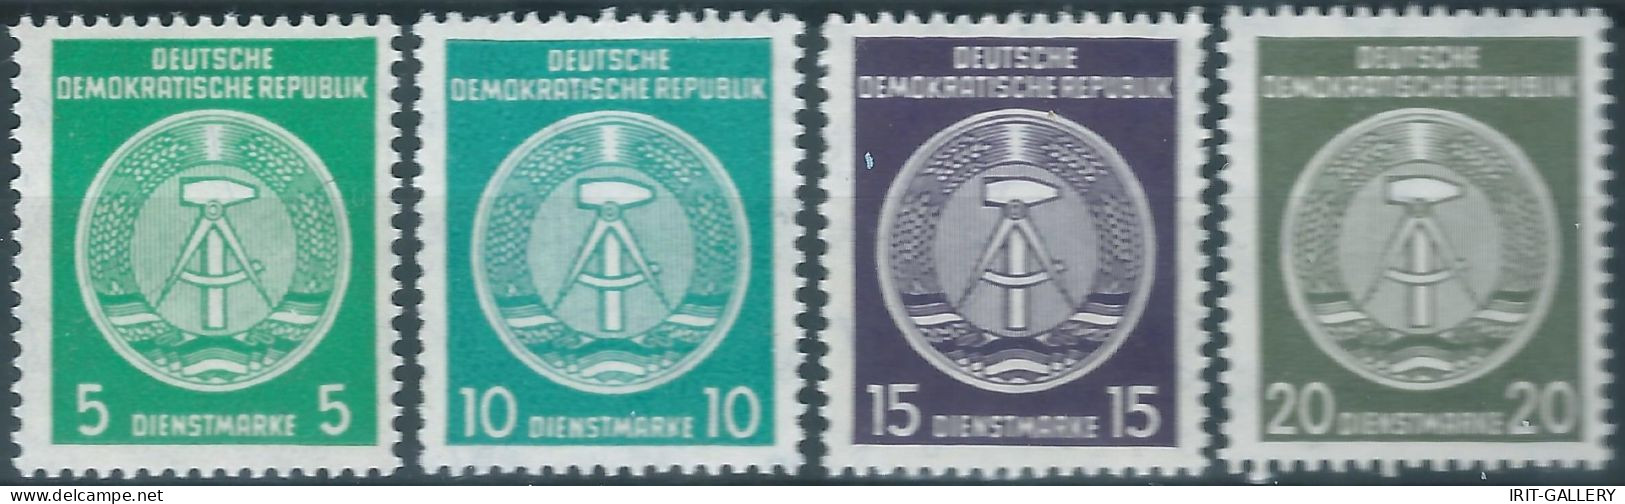 Germany-Deutschland,1954 /1956 Eastern Democratic Republic,DDR ,Service,MNH - Mint